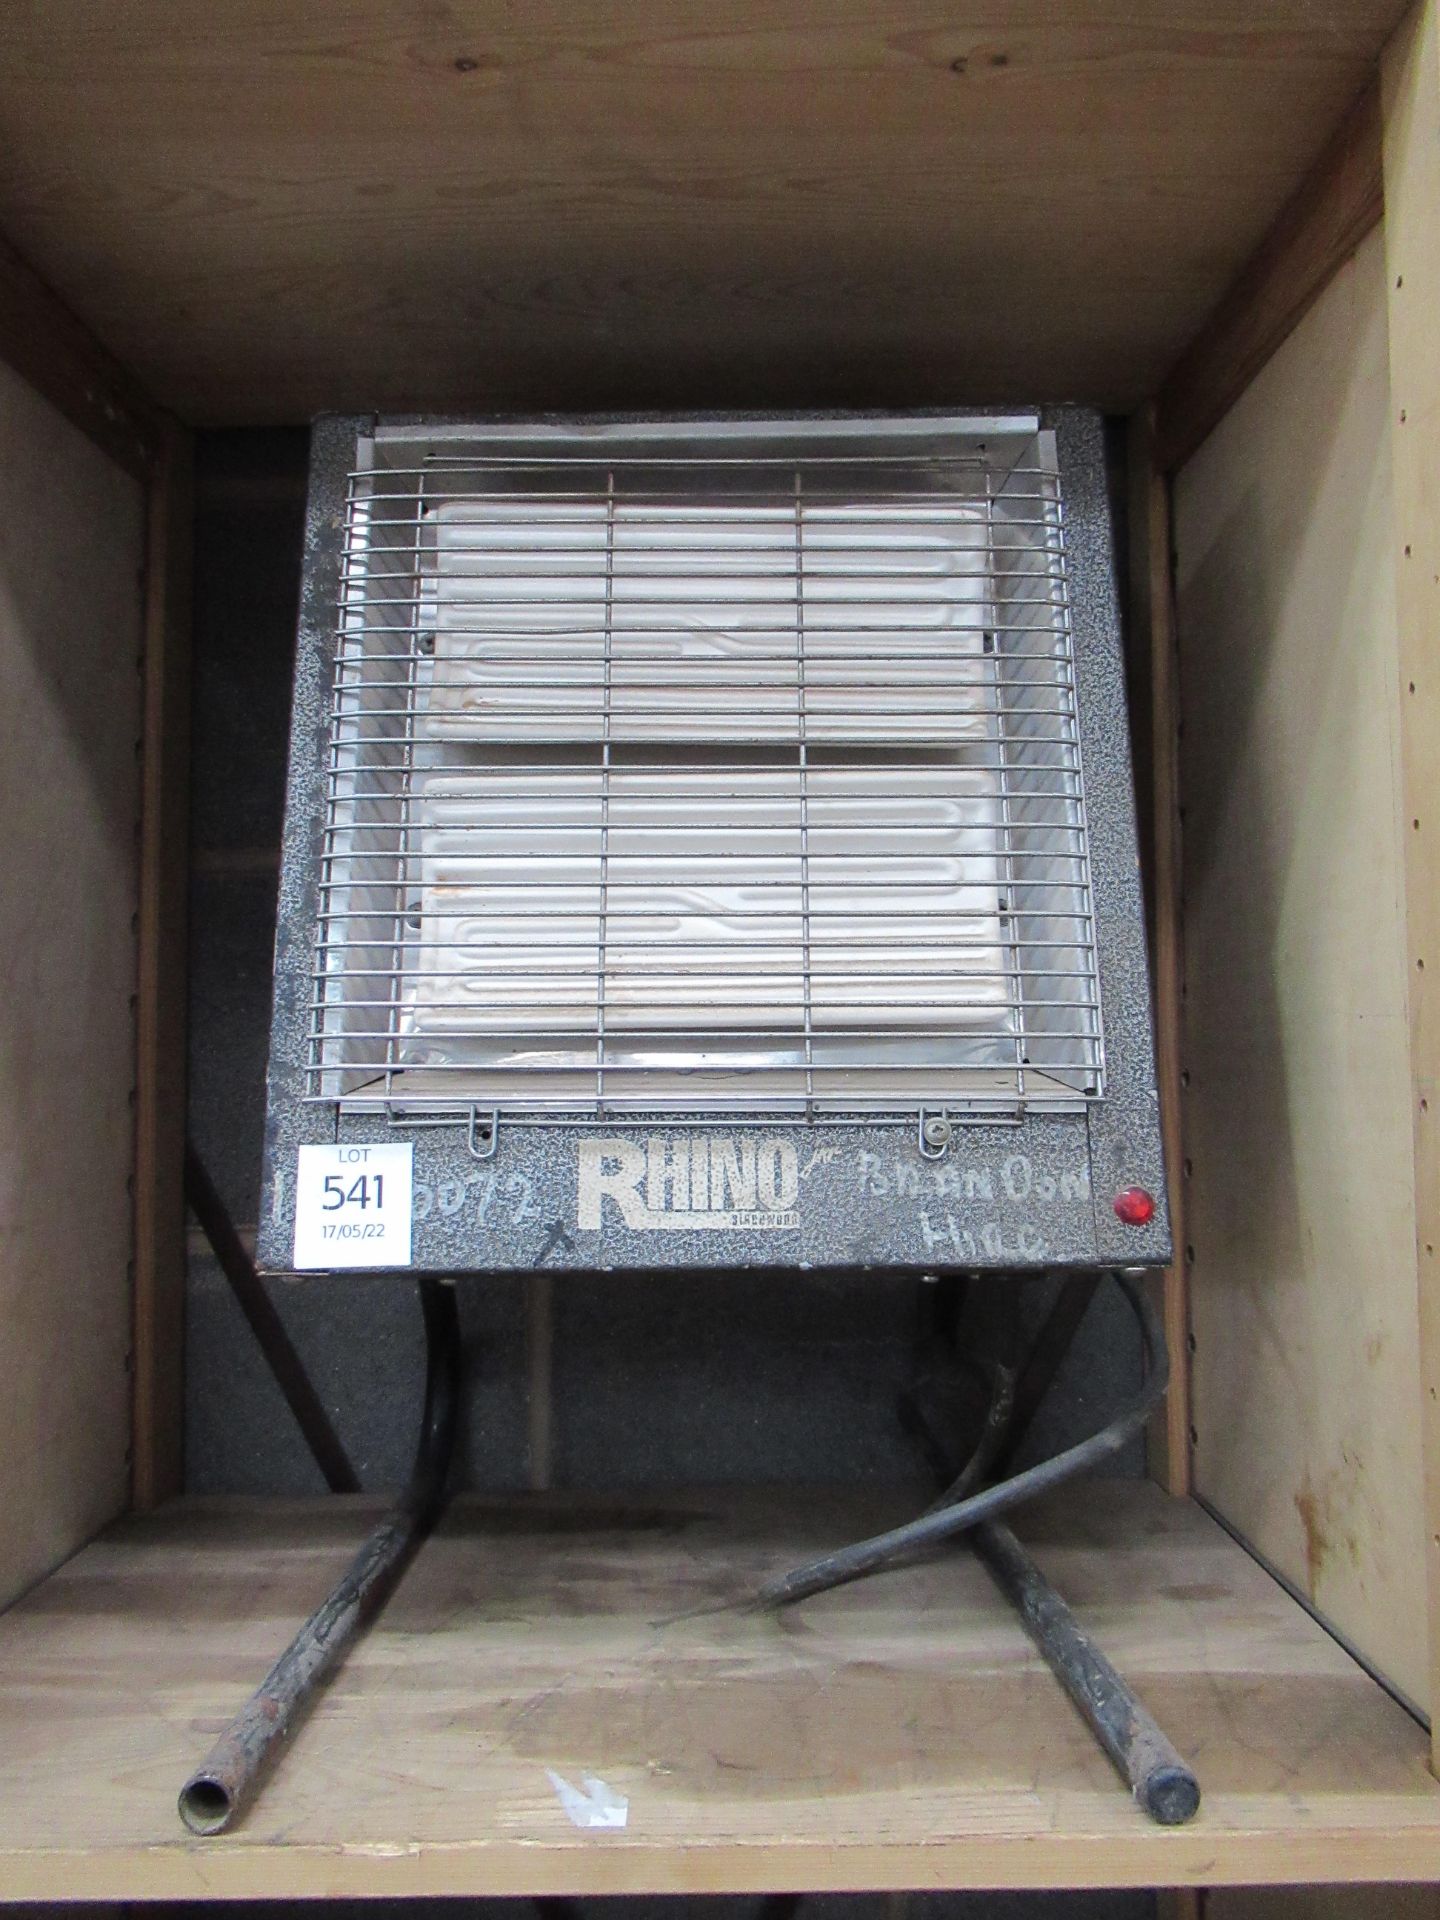 A Rhino 240V Heater